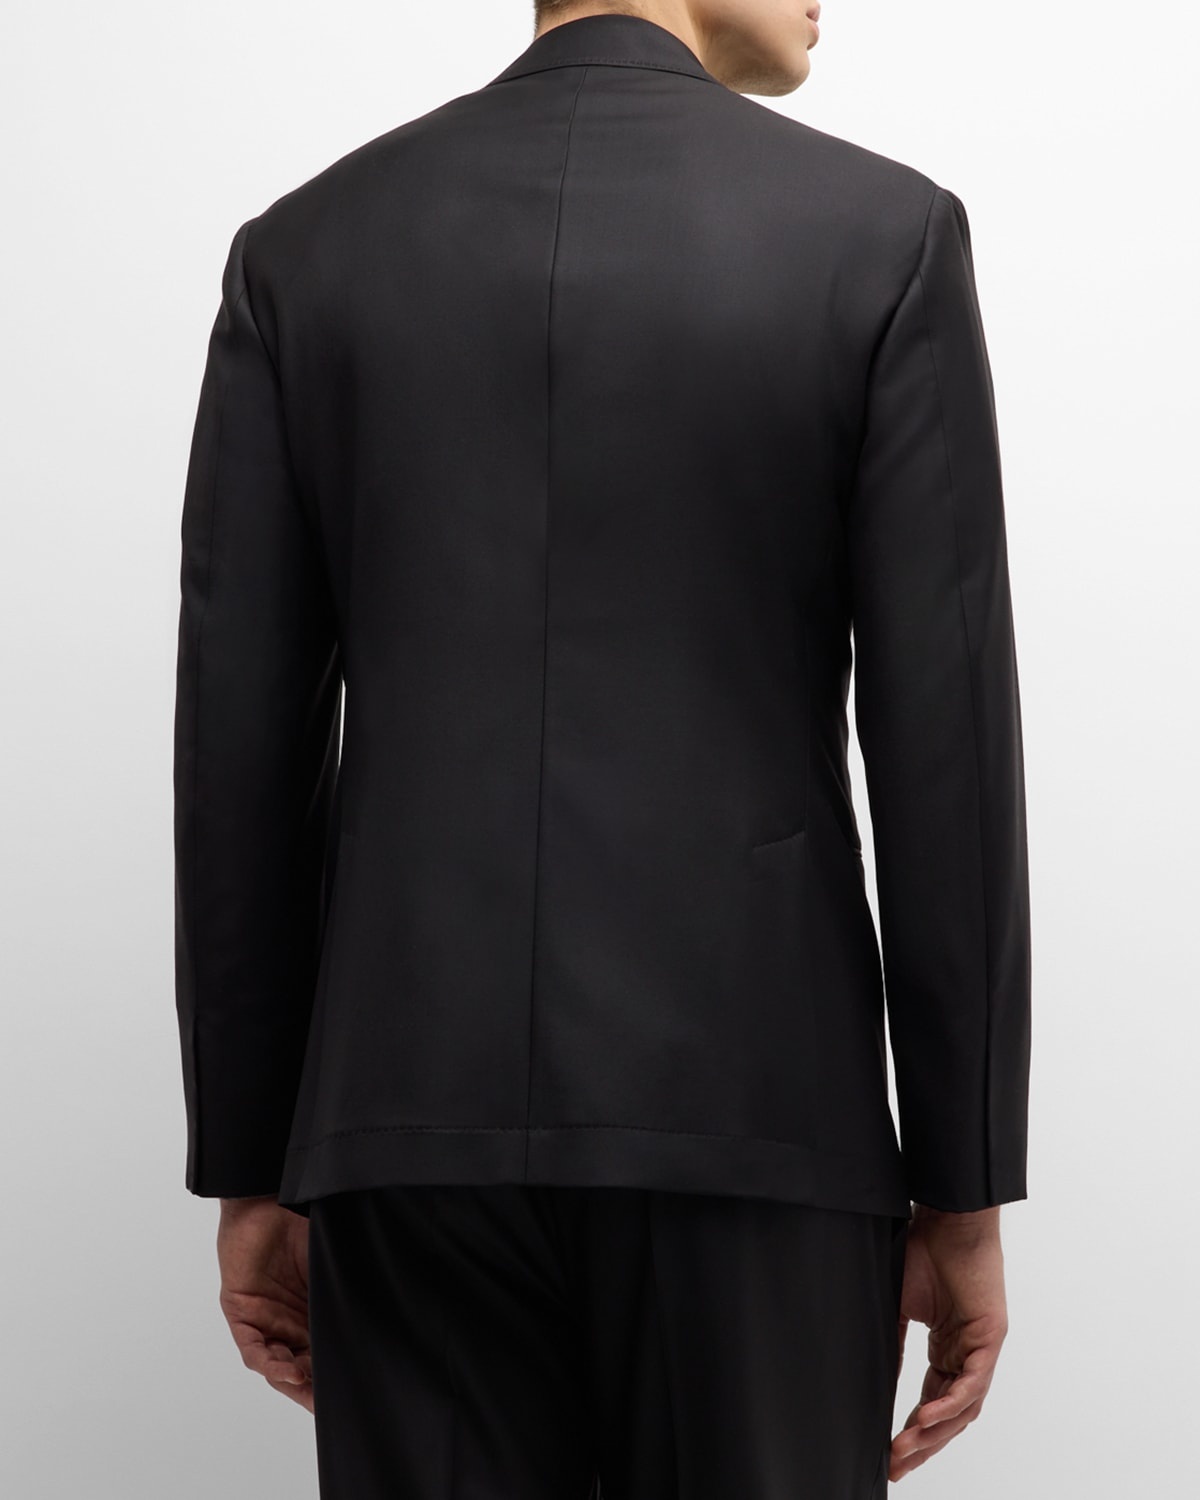 Men's Tasmanian Solid Virgin Wool Suit - 4